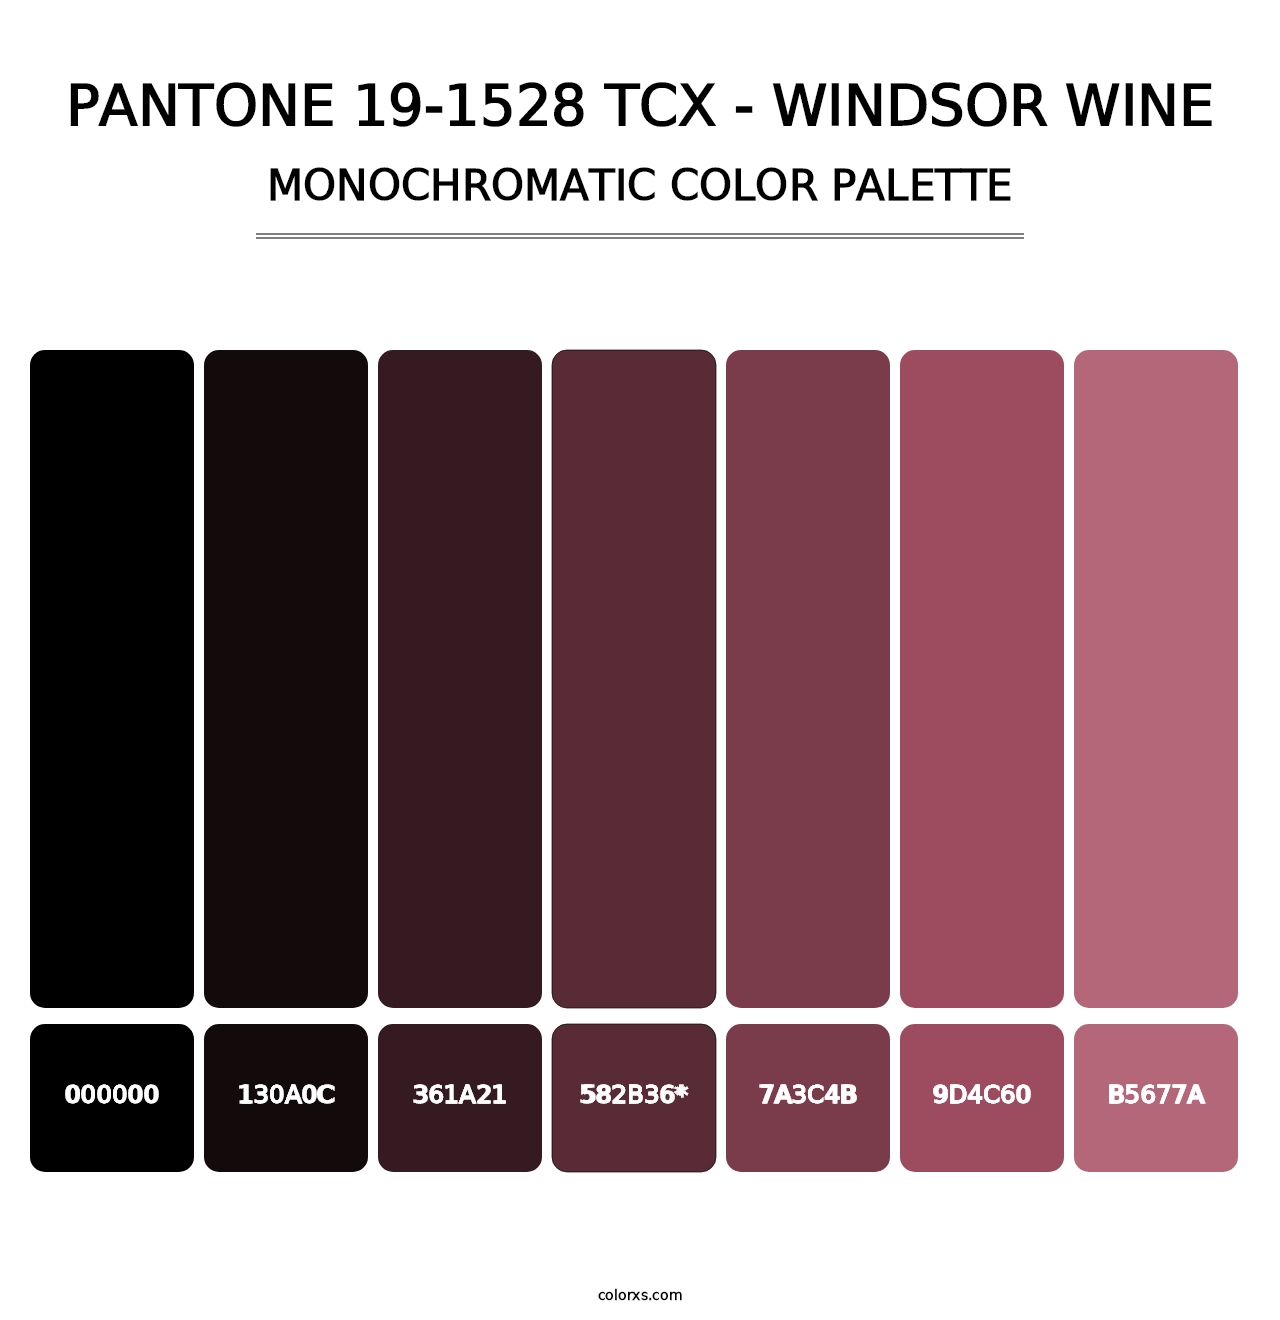 PANTONE 19-1528 TCX - Windsor Wine - Monochromatic Color Palette